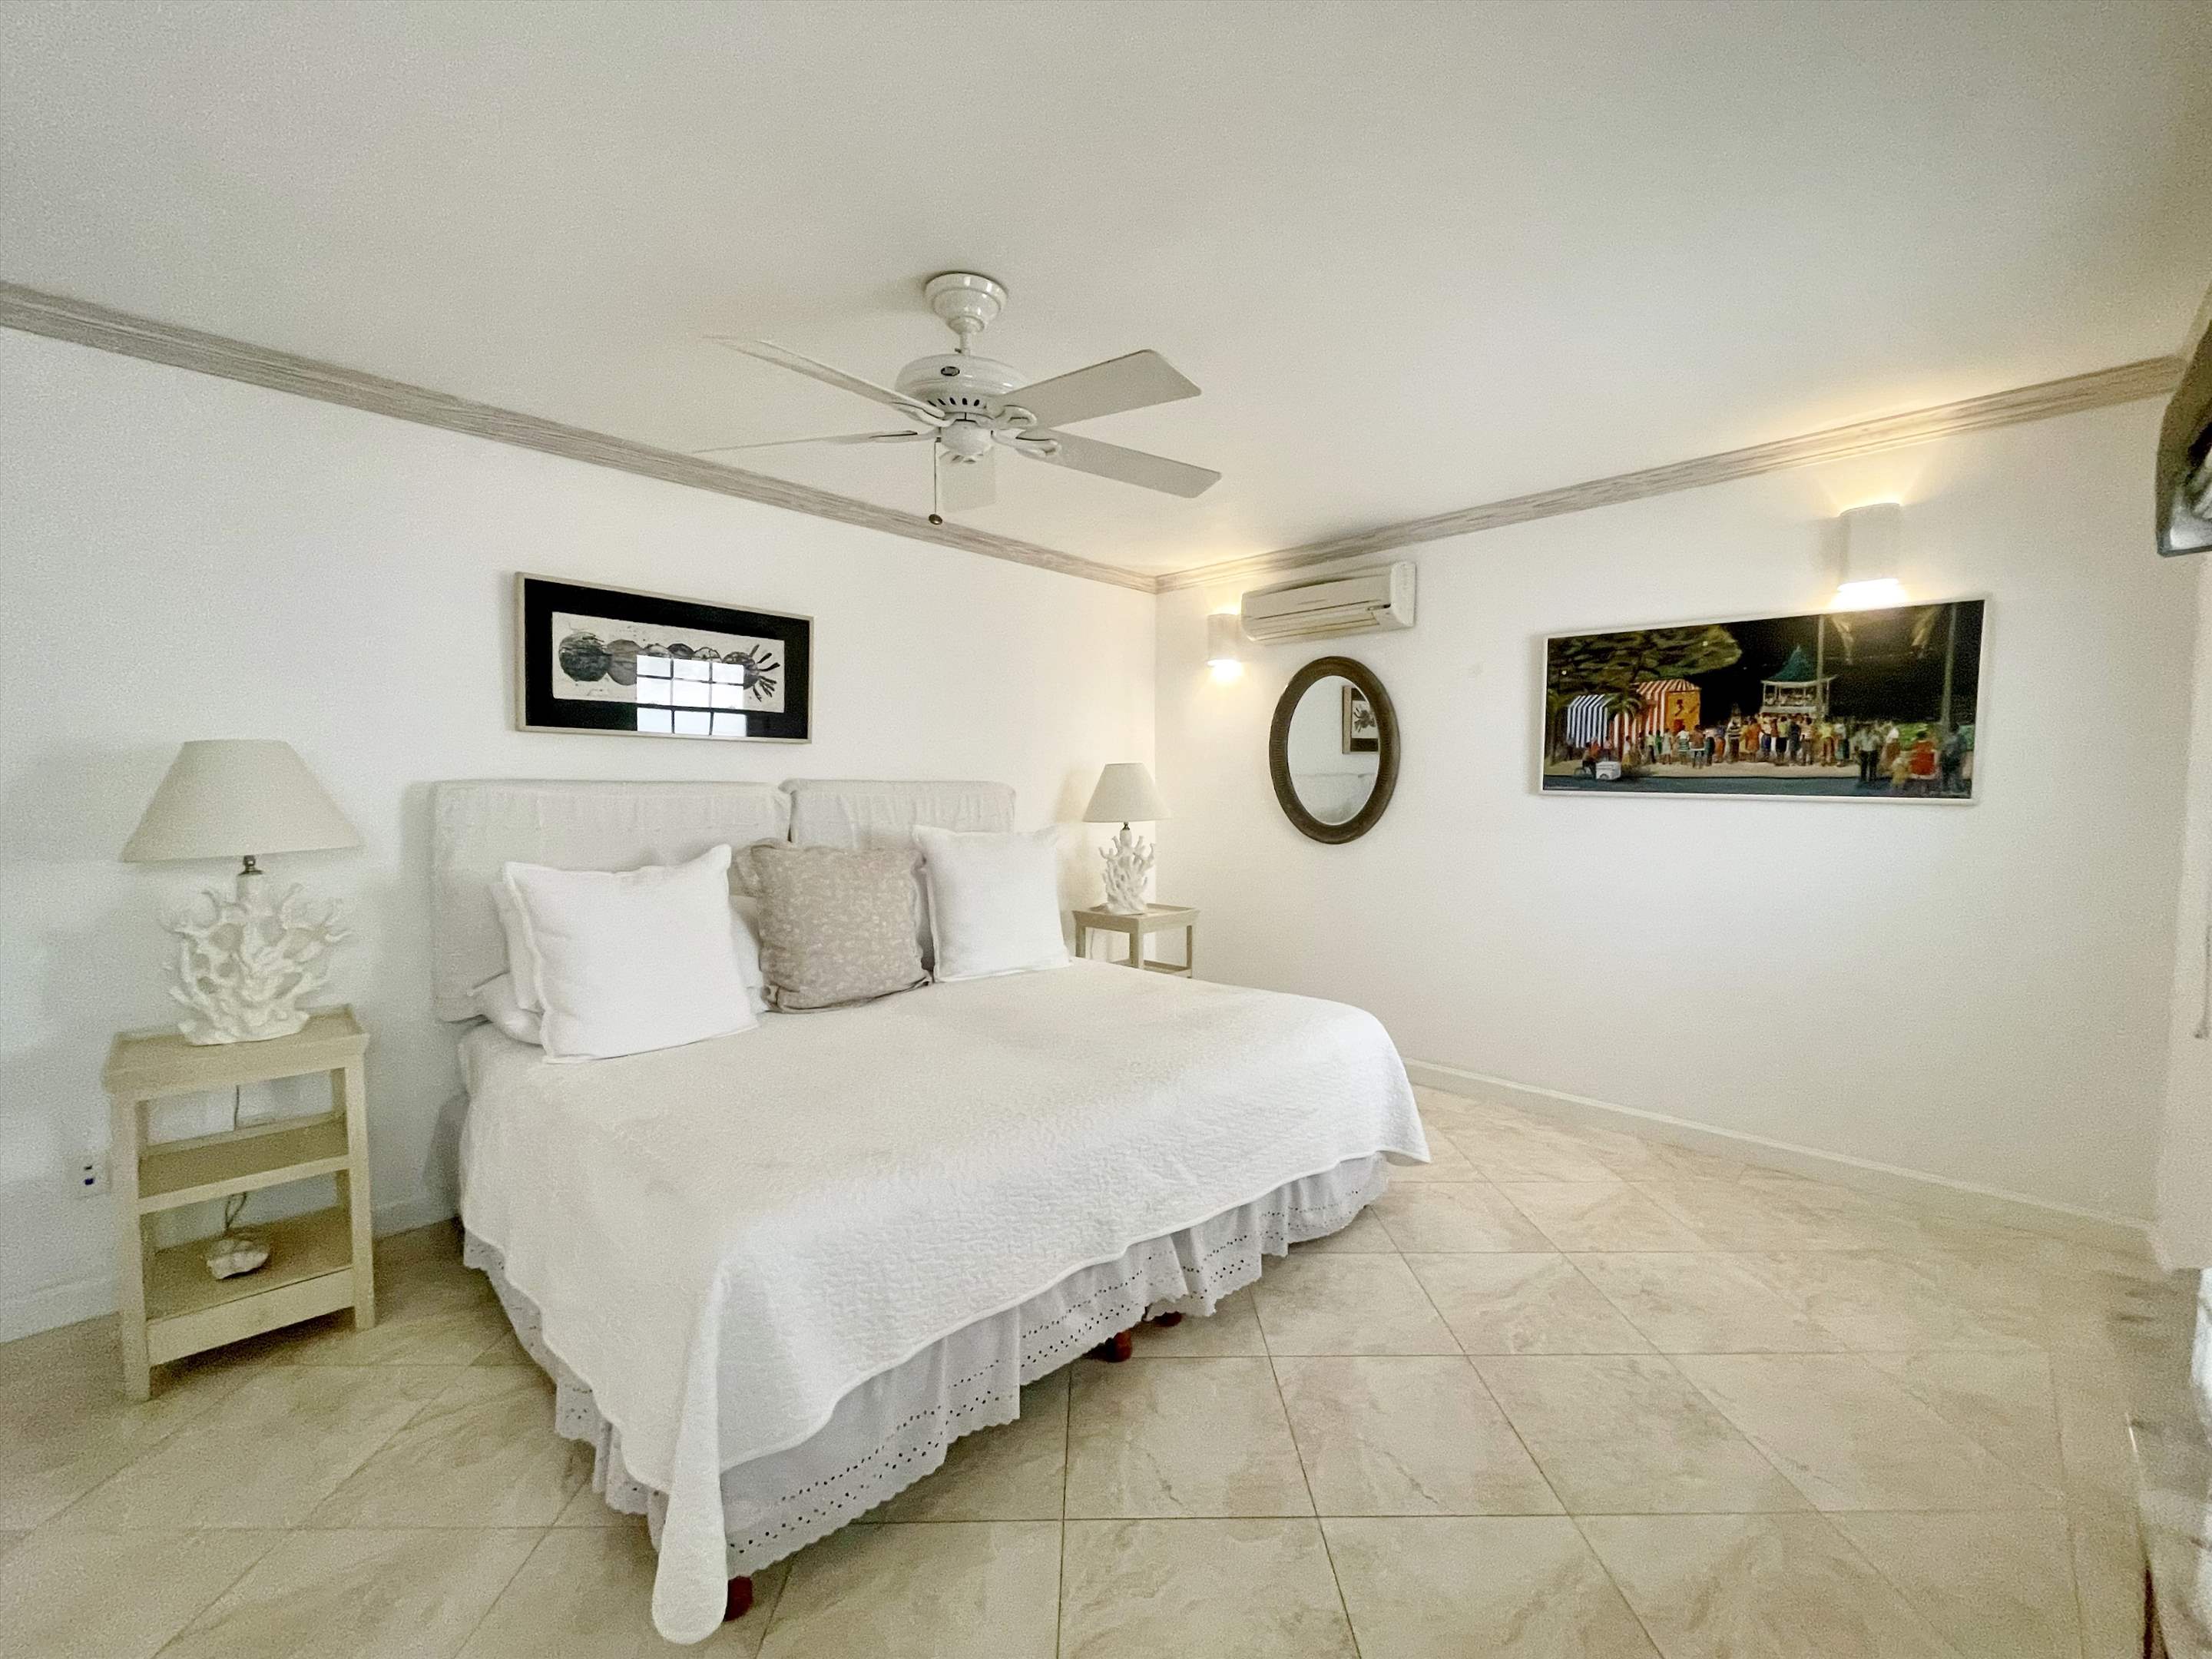 Villas on the Beach 103, 2 bedroom, 2 bedroom apartment in St. James & West Coast, Barbados Photo #14